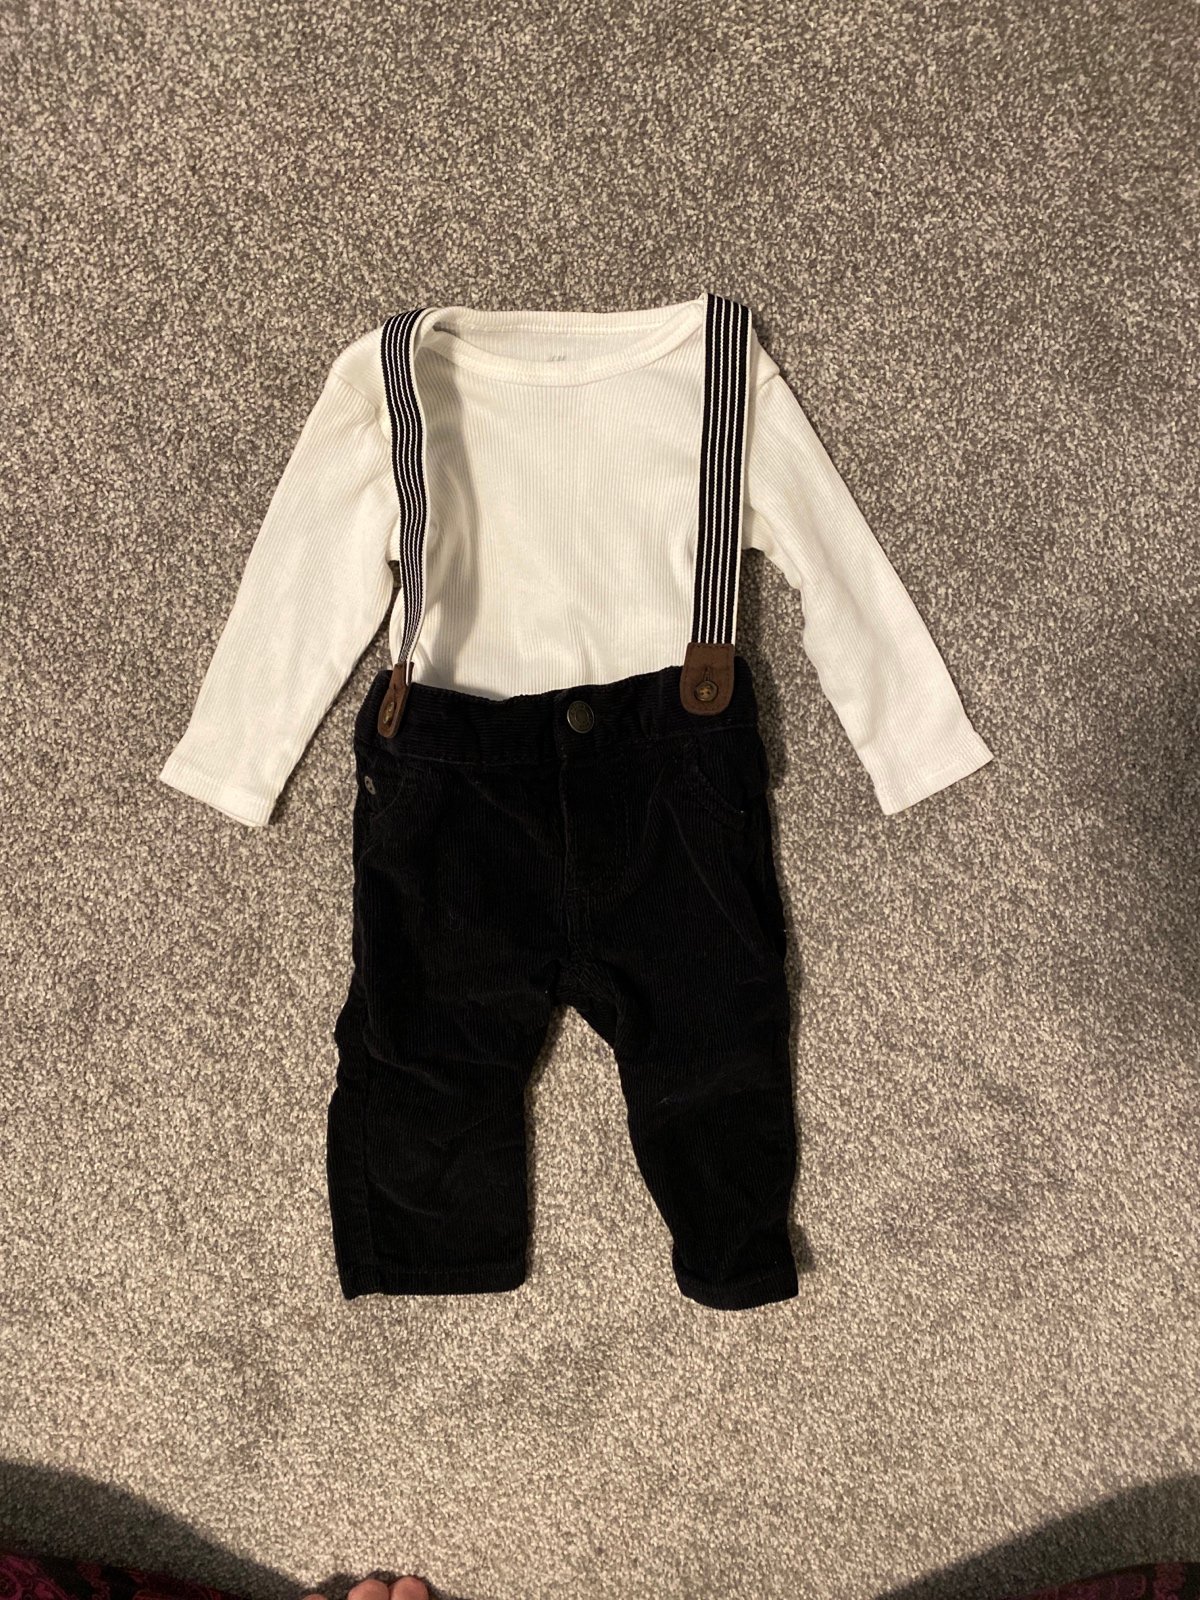 Baby boy suspender outfit GYb7QjgDC